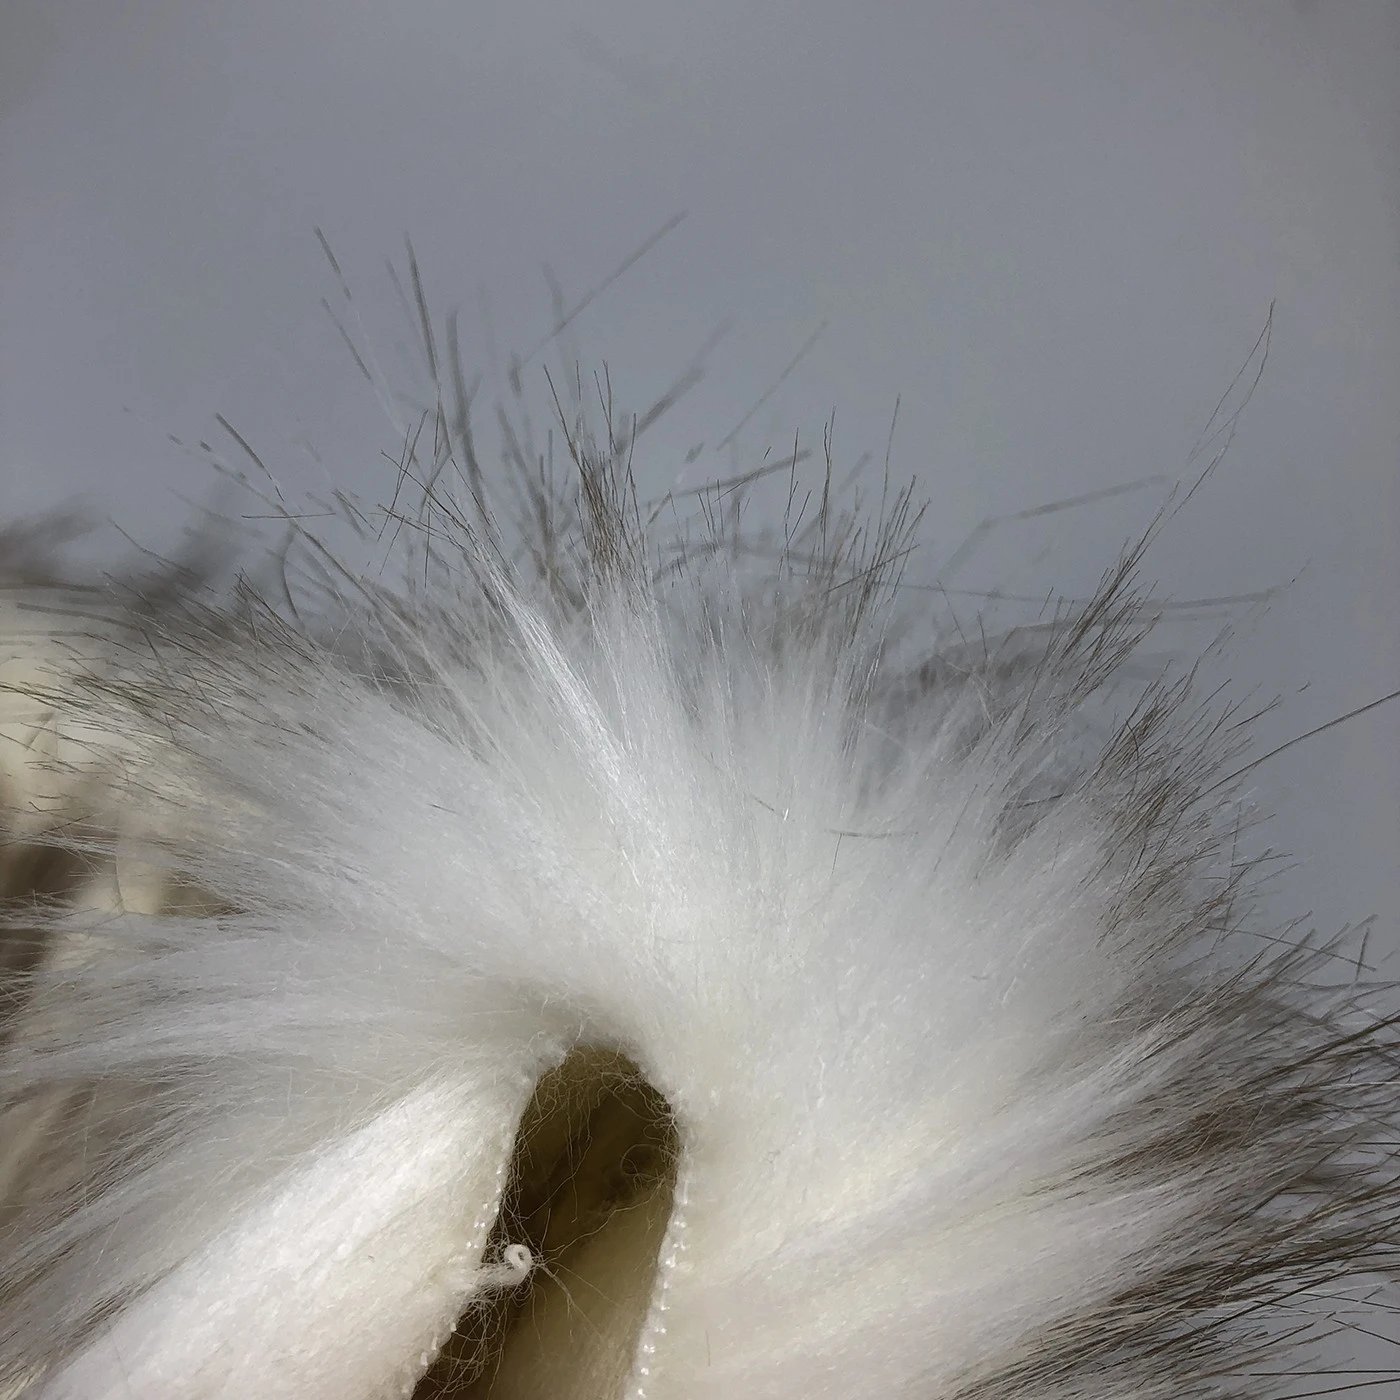 High quality soft artificial fox fur fabric long pile faux fox fur material for clothes collar bag shoes